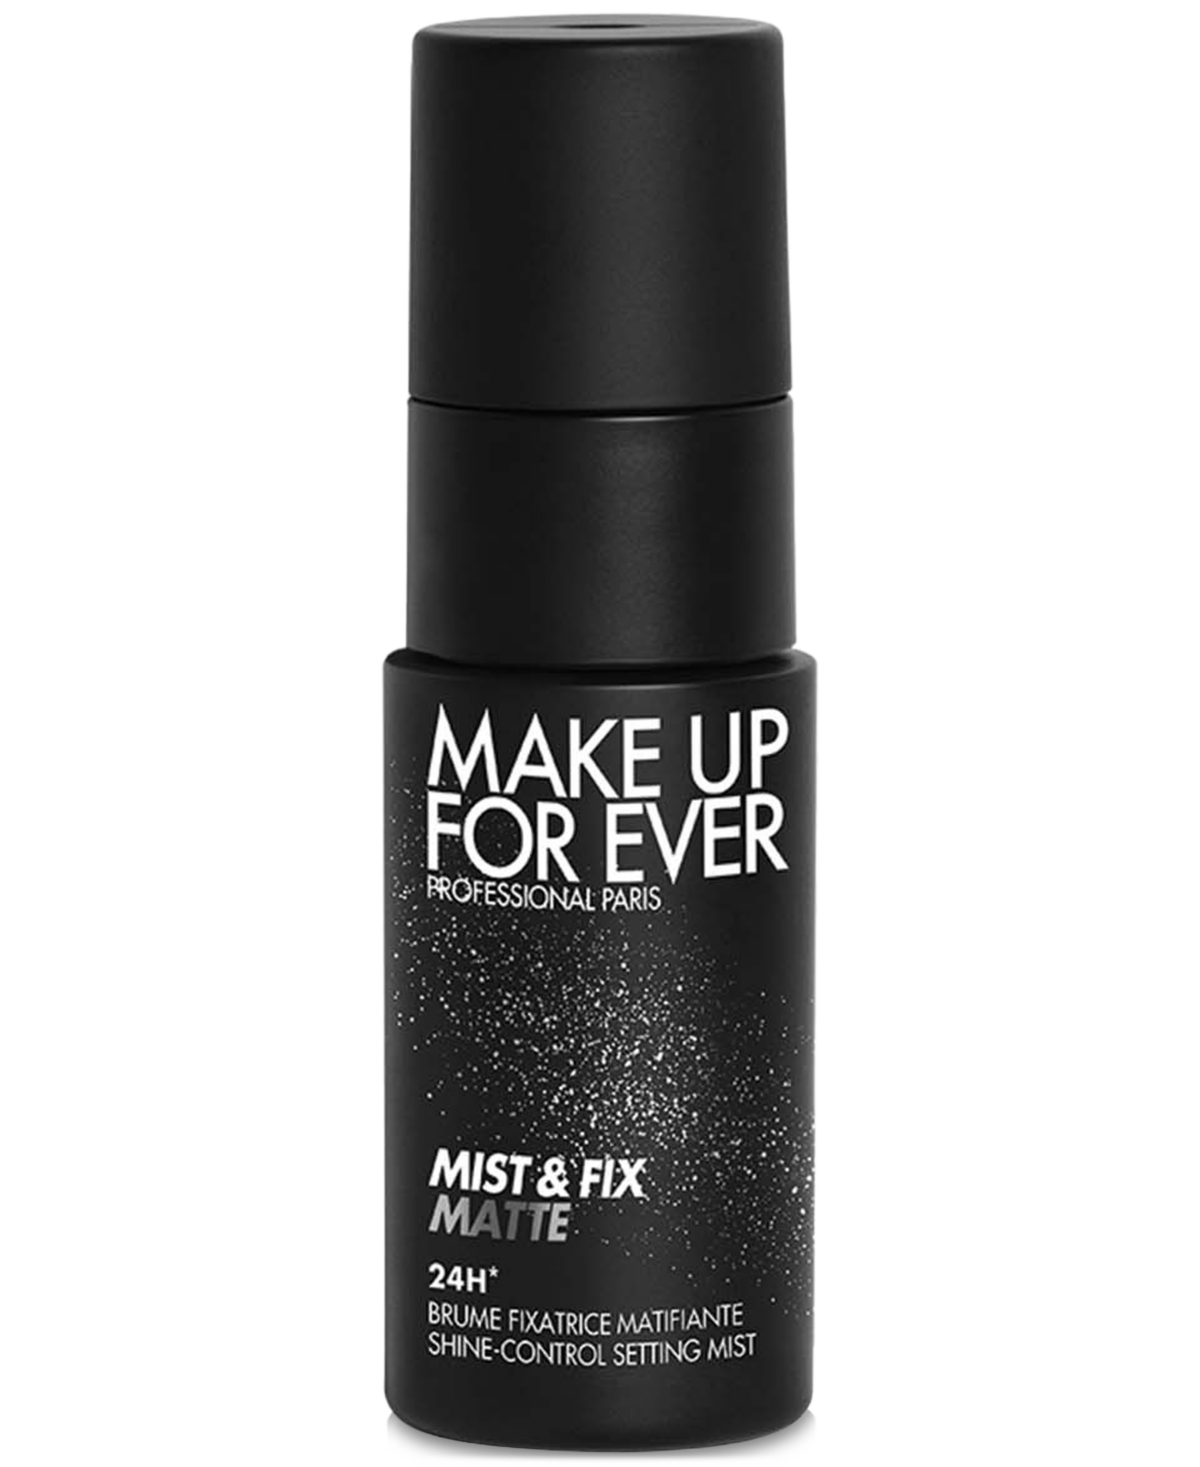 Make Up For Ever Mist & Fix Matte 24H Shine-Control Setting Mist Mini, 1 oz.